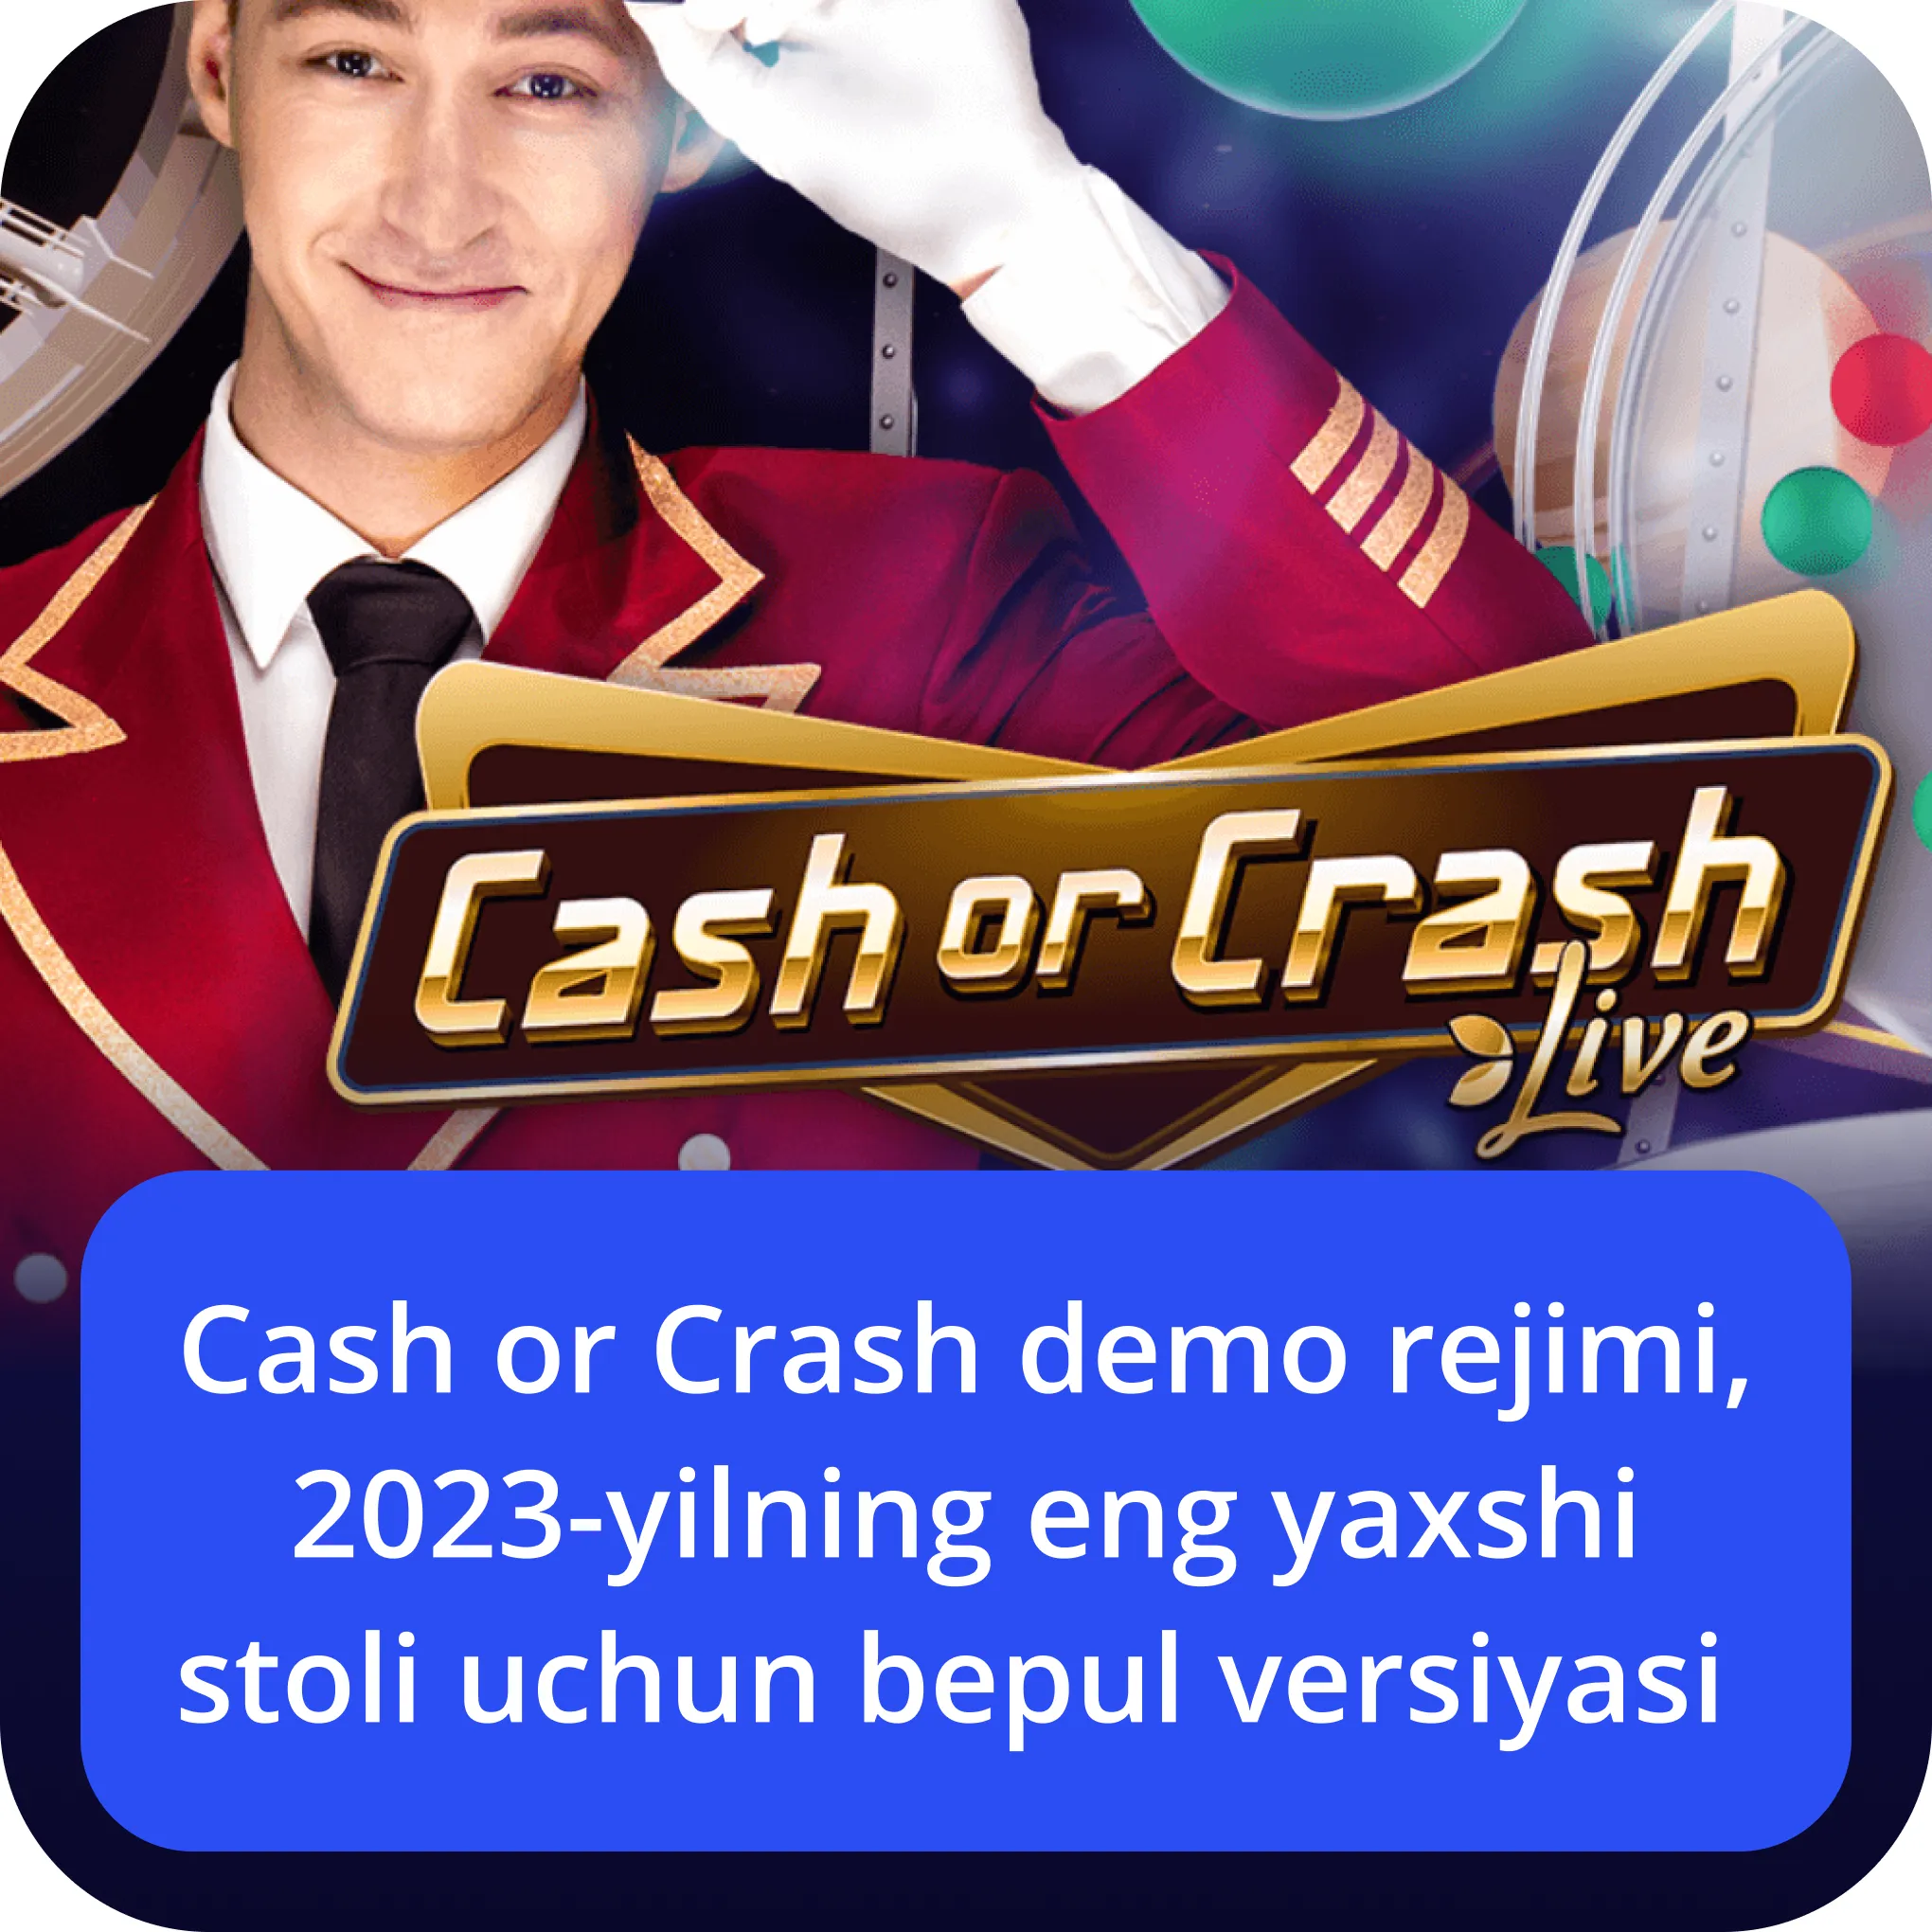 Cash or Crash demo